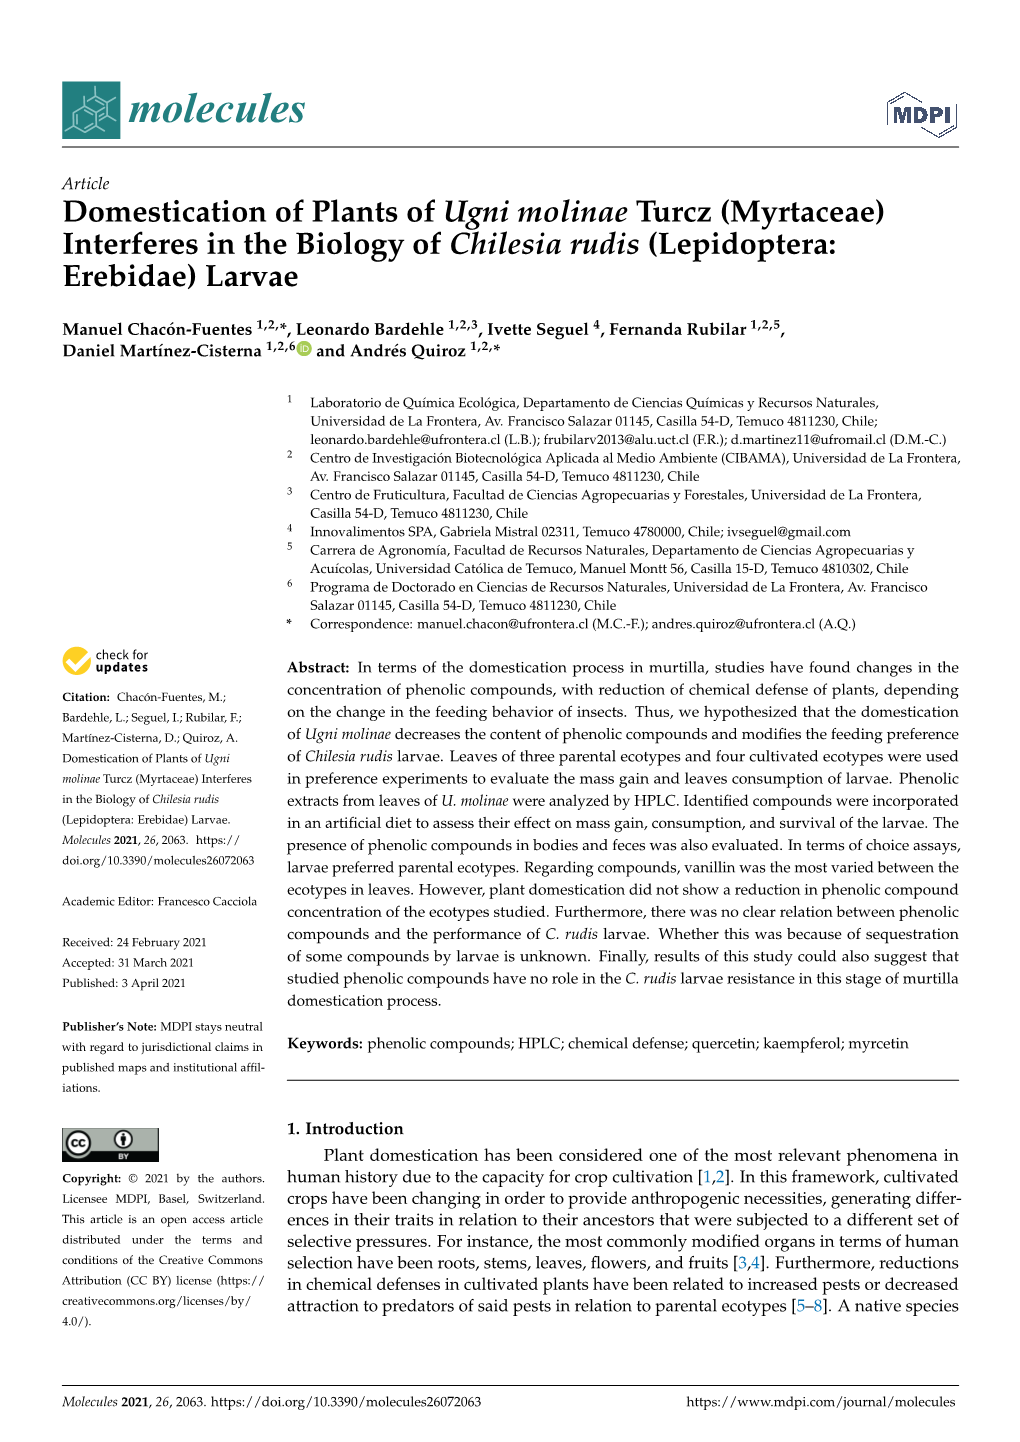 Domestication of Plants of Ugni Molinae Turcz (Myrtaceae) Interferes in the Biology of Chilesia Rudis (Lepidoptera: Erebidae) Larvae